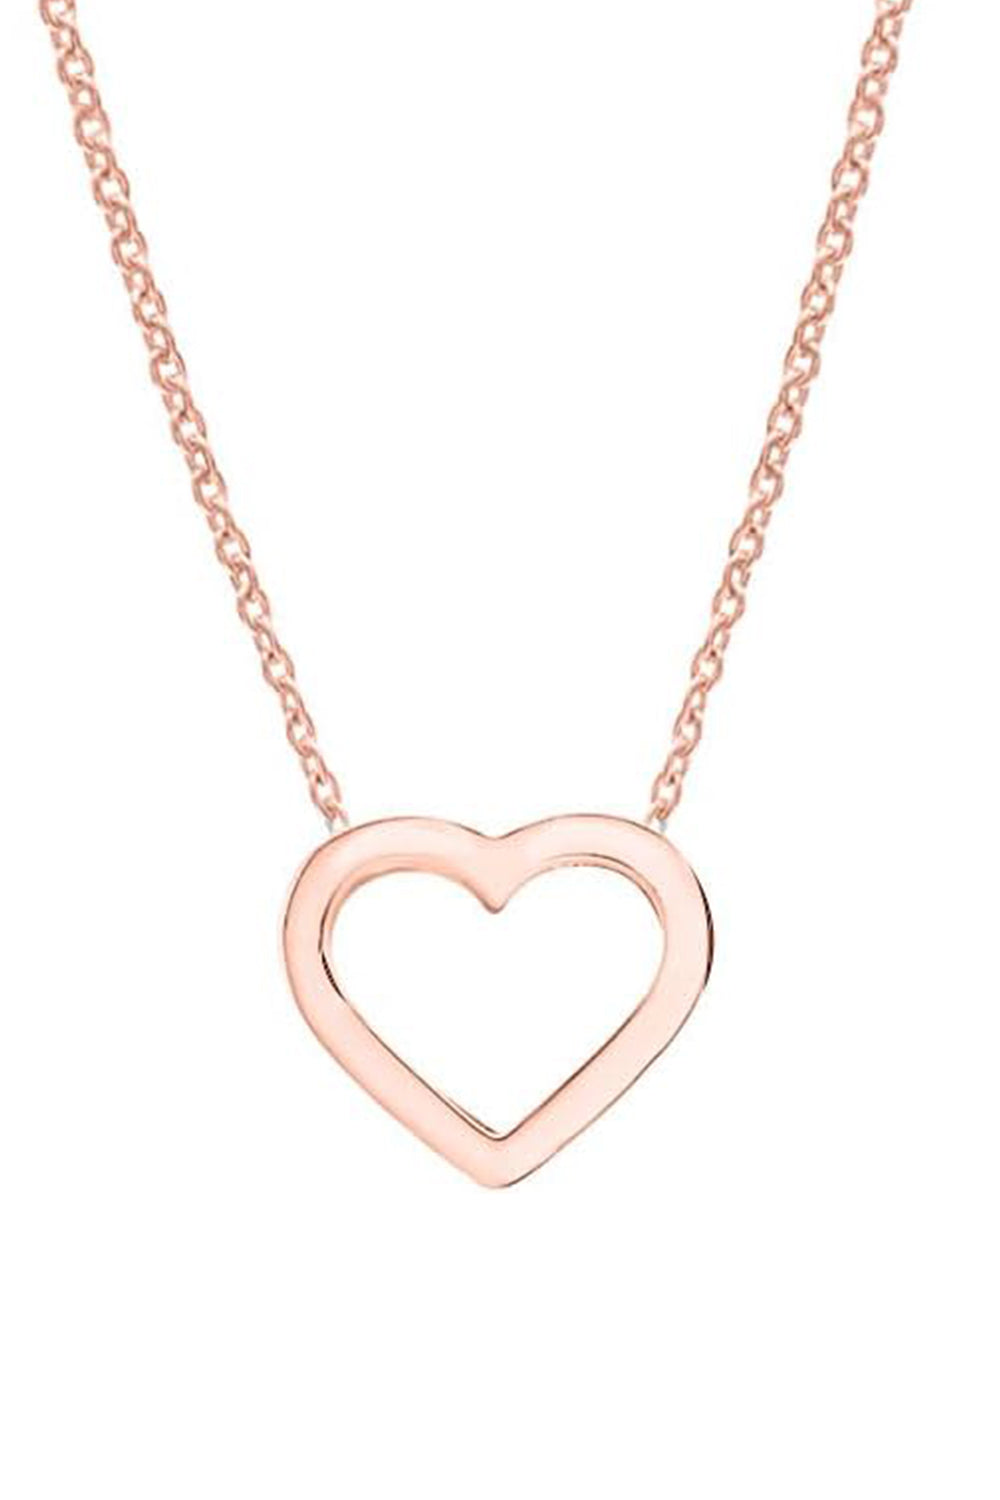 Rose Gold Color Open Heart Pendant Necklace